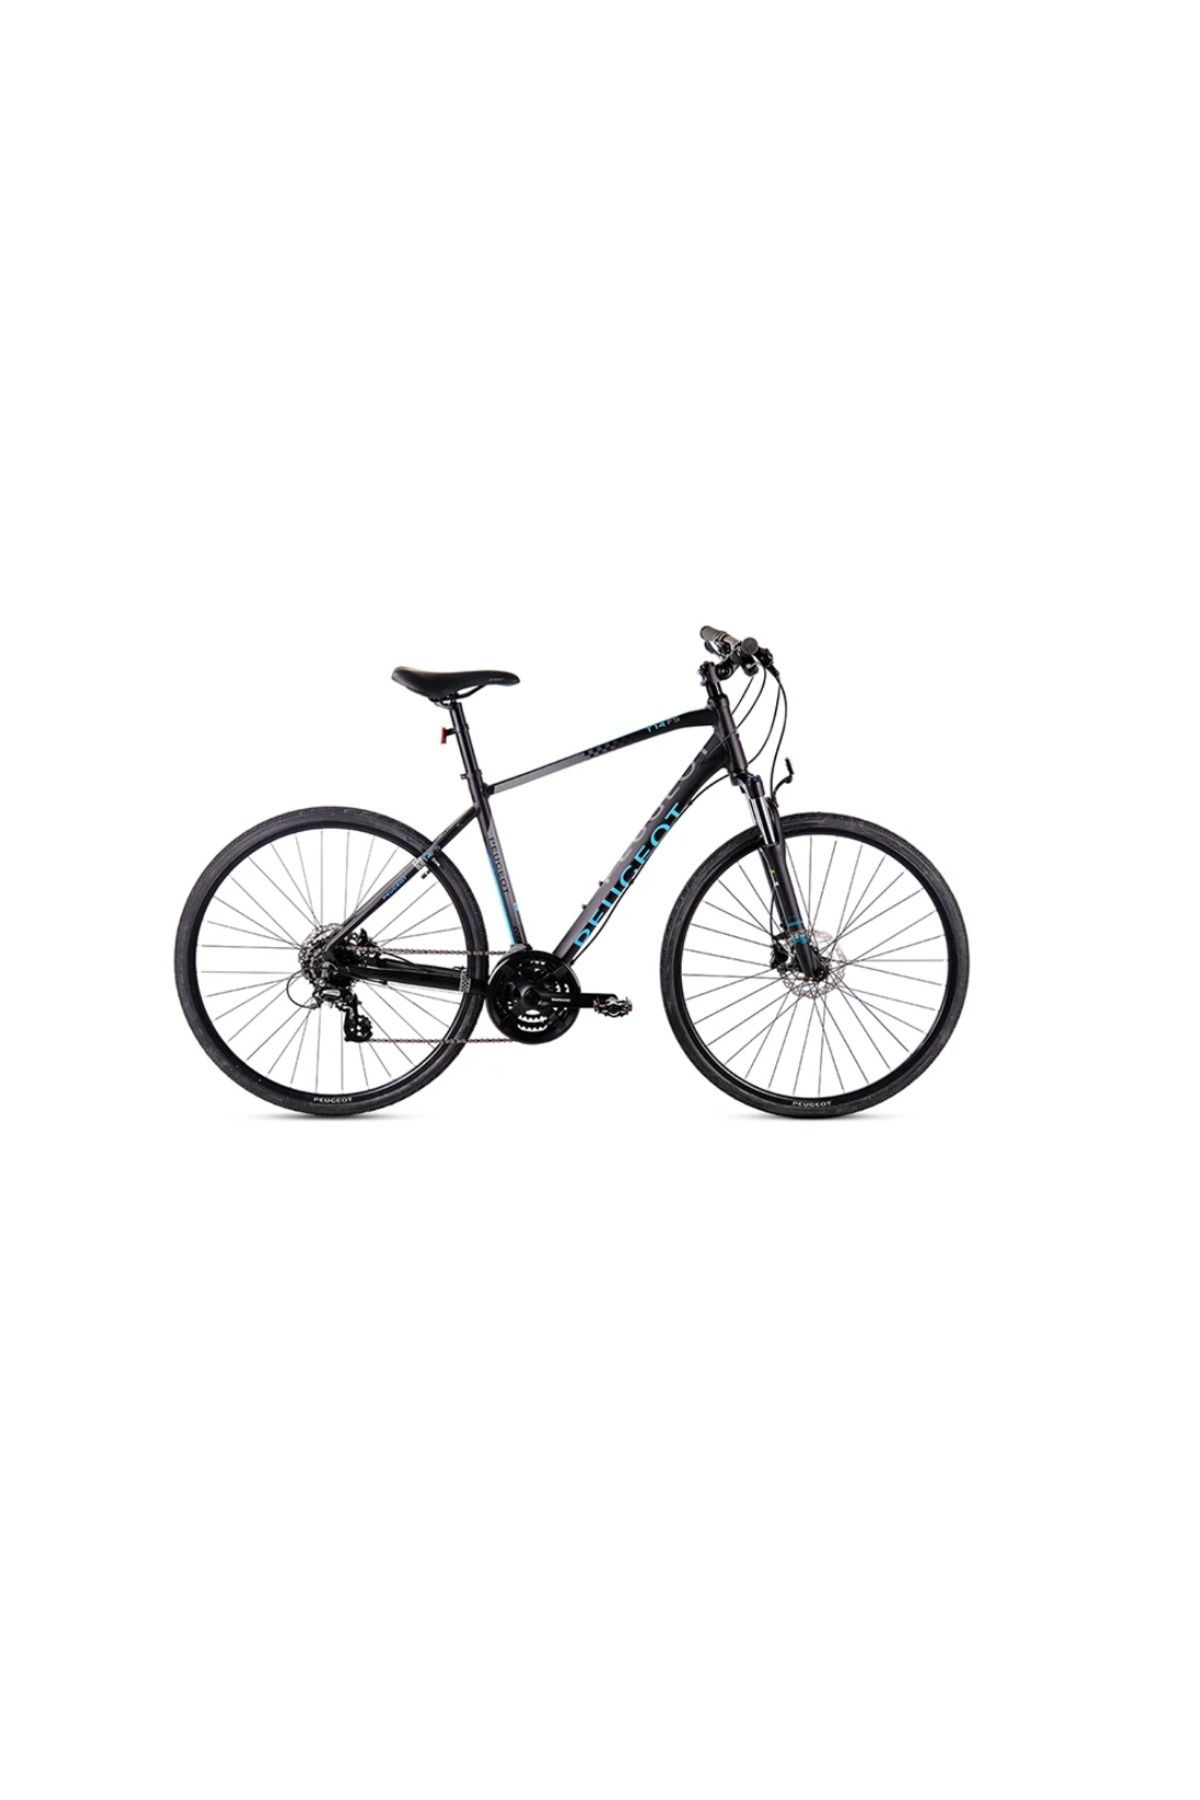 Peugeot Bisiklet Peugeot T17 FS 28 Jant Şehir Bisikleti Siyah-Mavi 54 cm